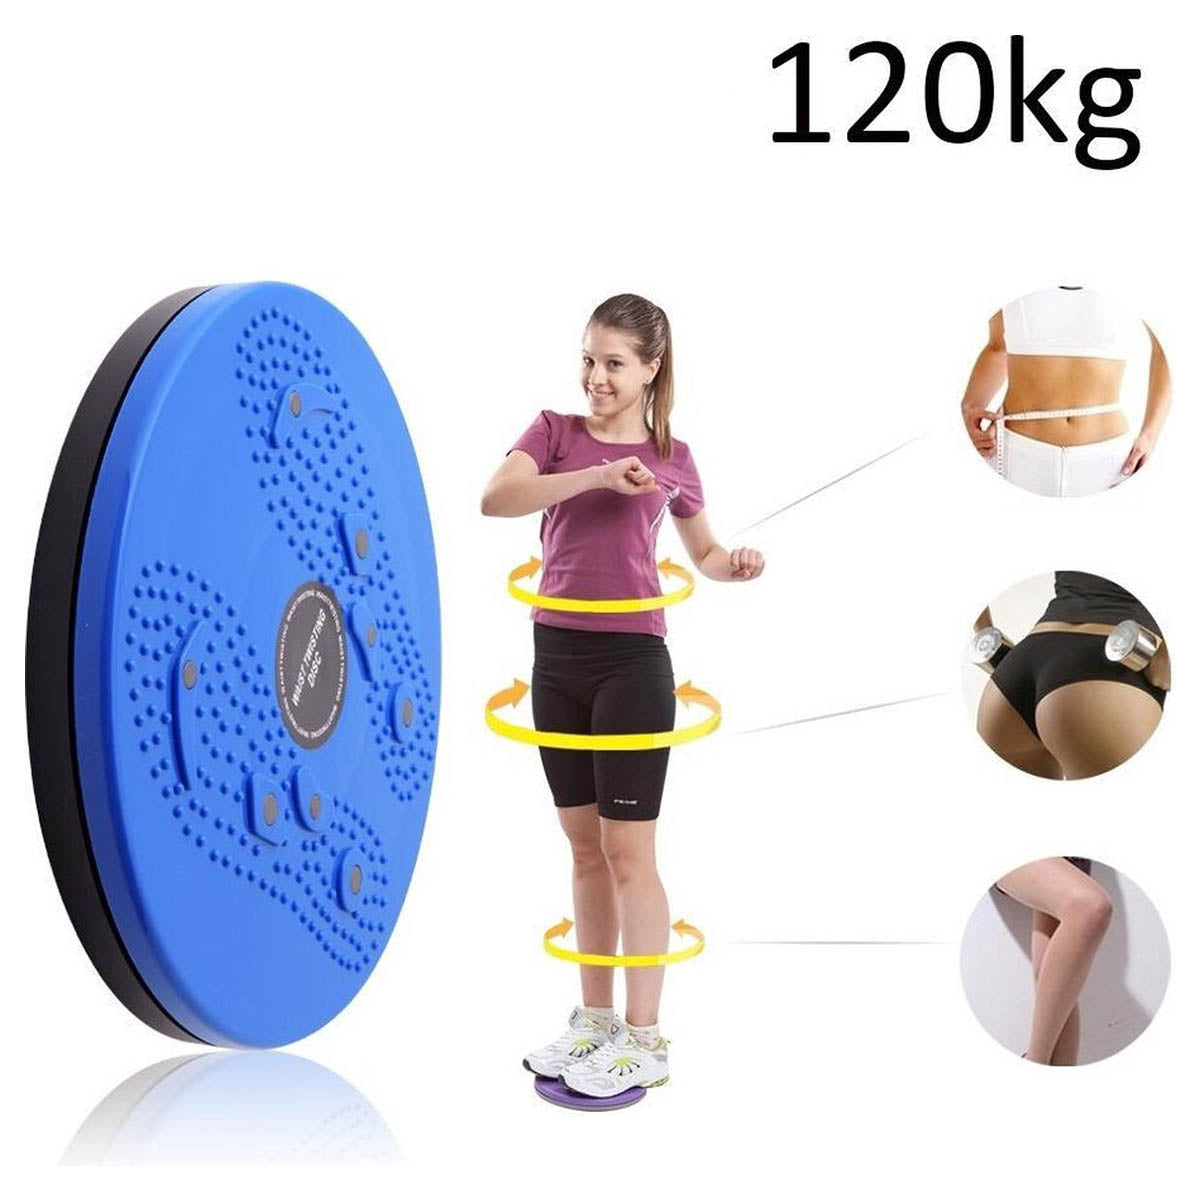 <tc>Ariko</tc> Waist twisting plate | Twist plate | Twist Trainer | Aerobic Exercise Fitness Magnet | Lose weight | Foot massage | Magnets | Fitness | Blue